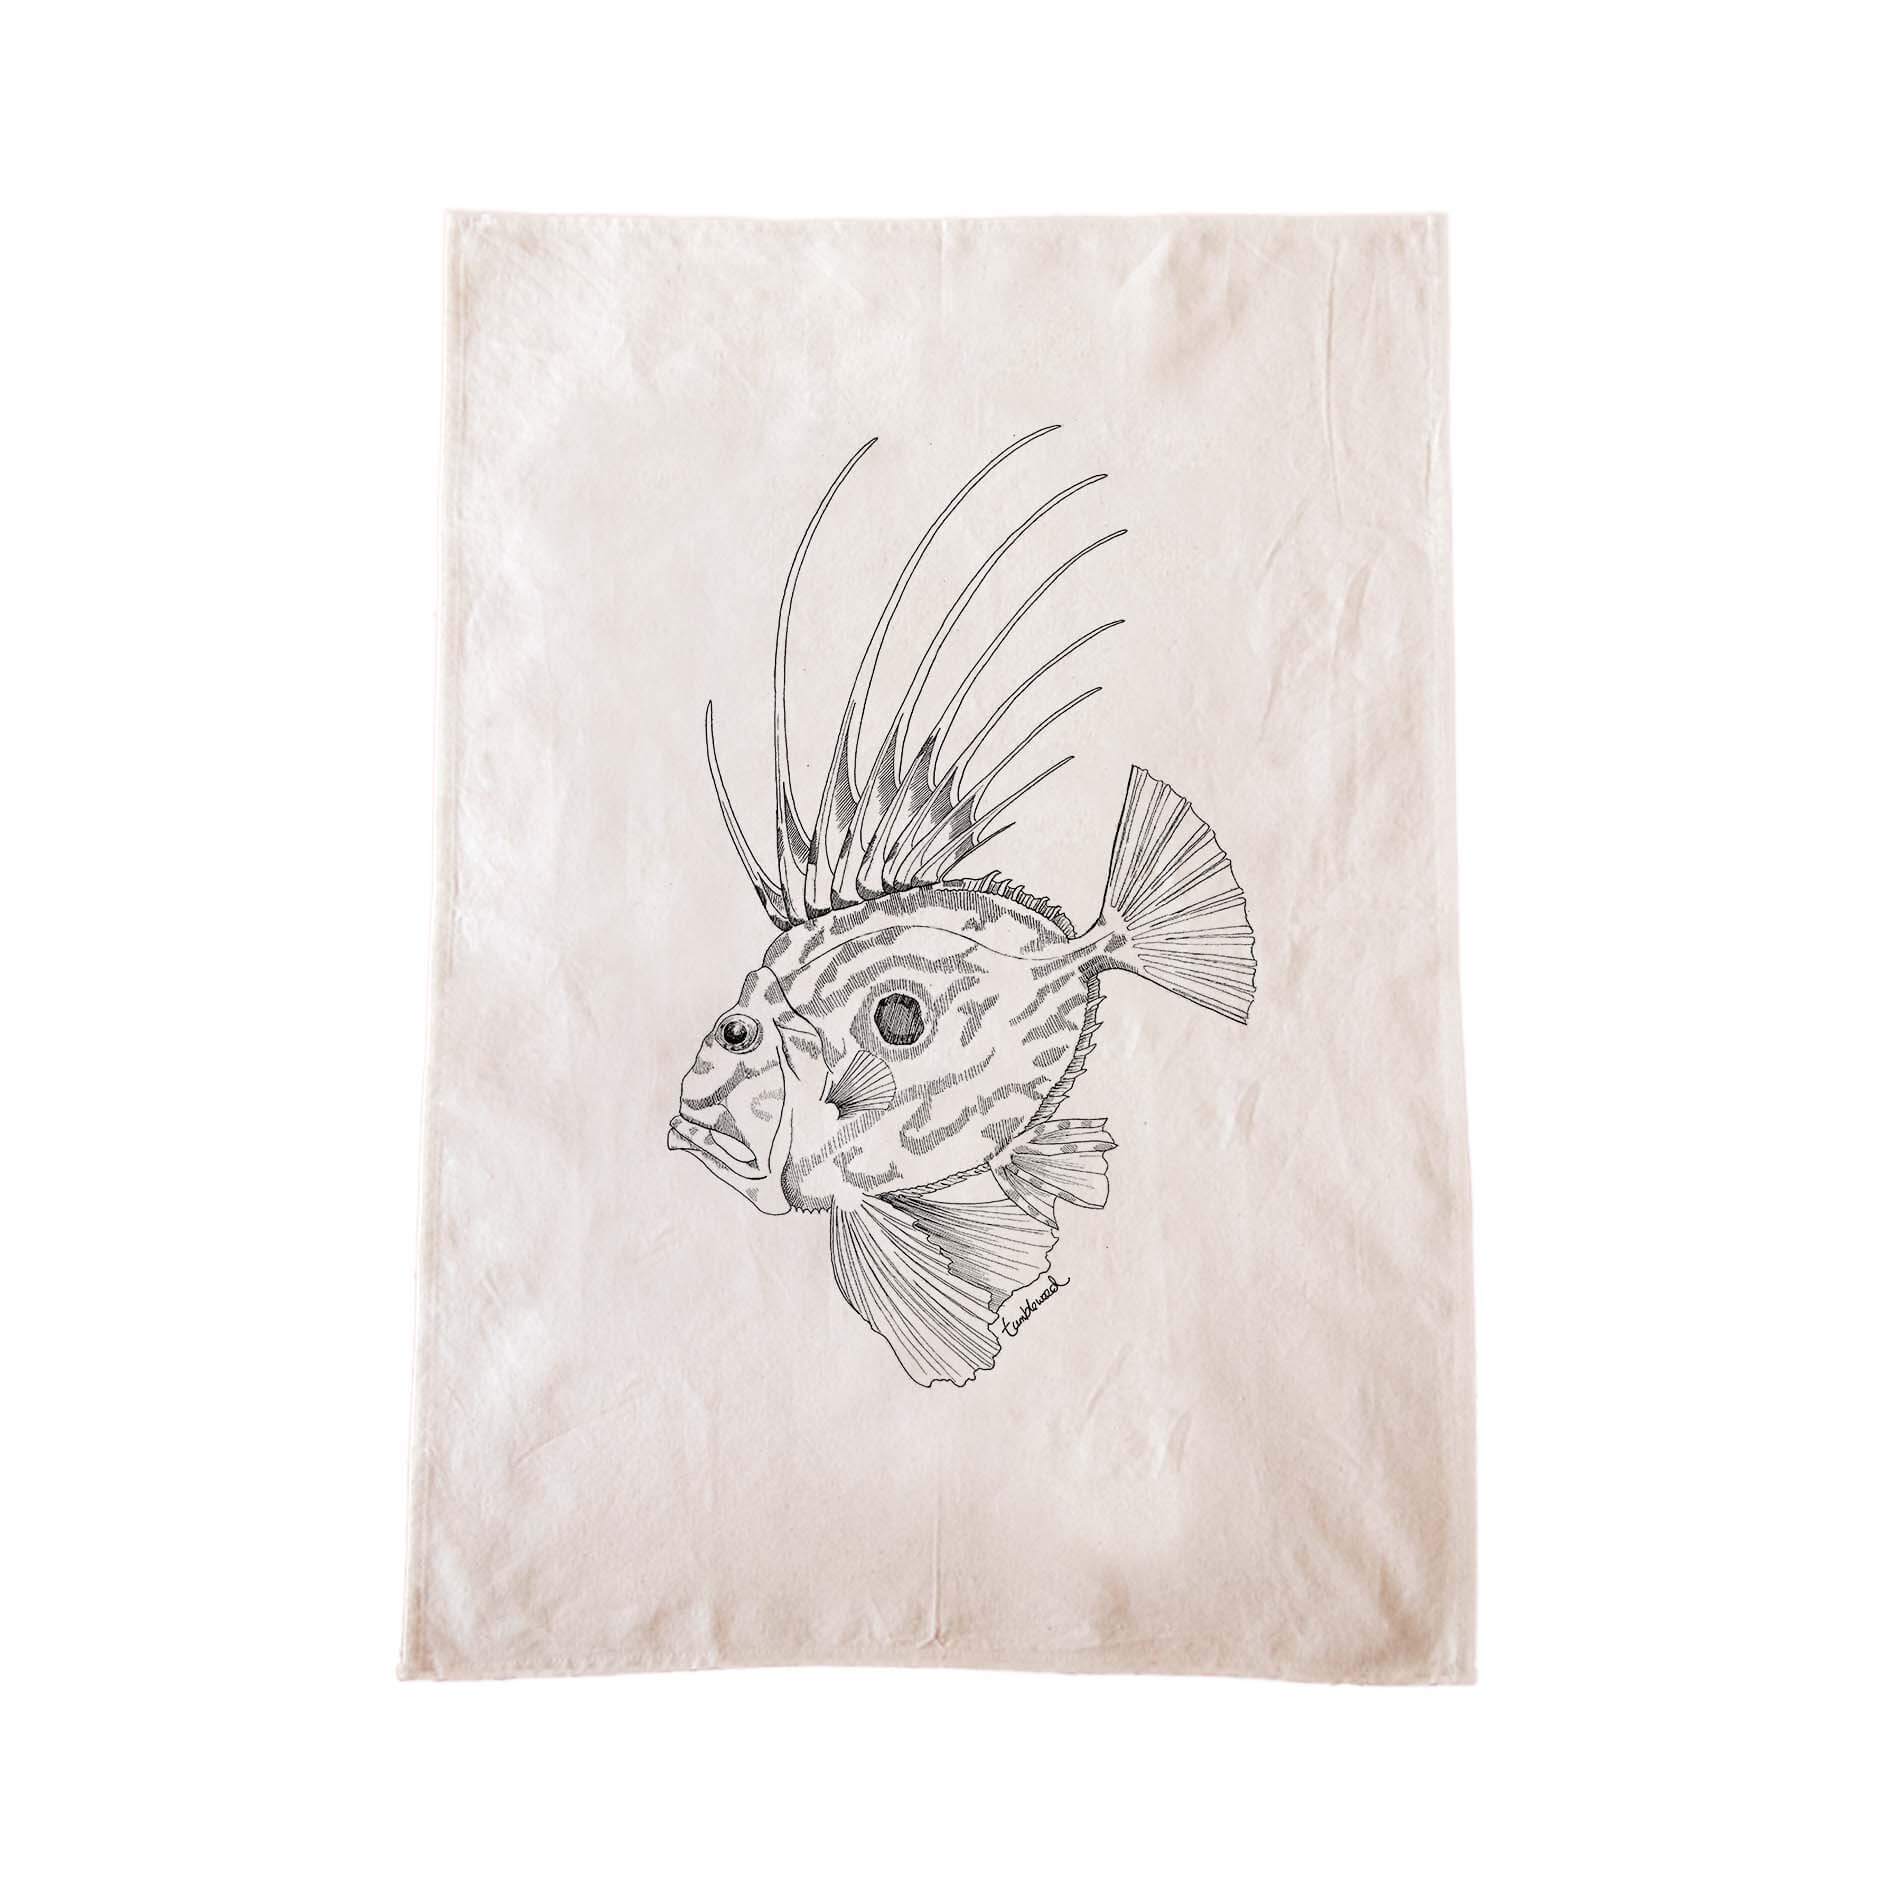 Off-white cotton tea towel with a screen printed John Dory design.